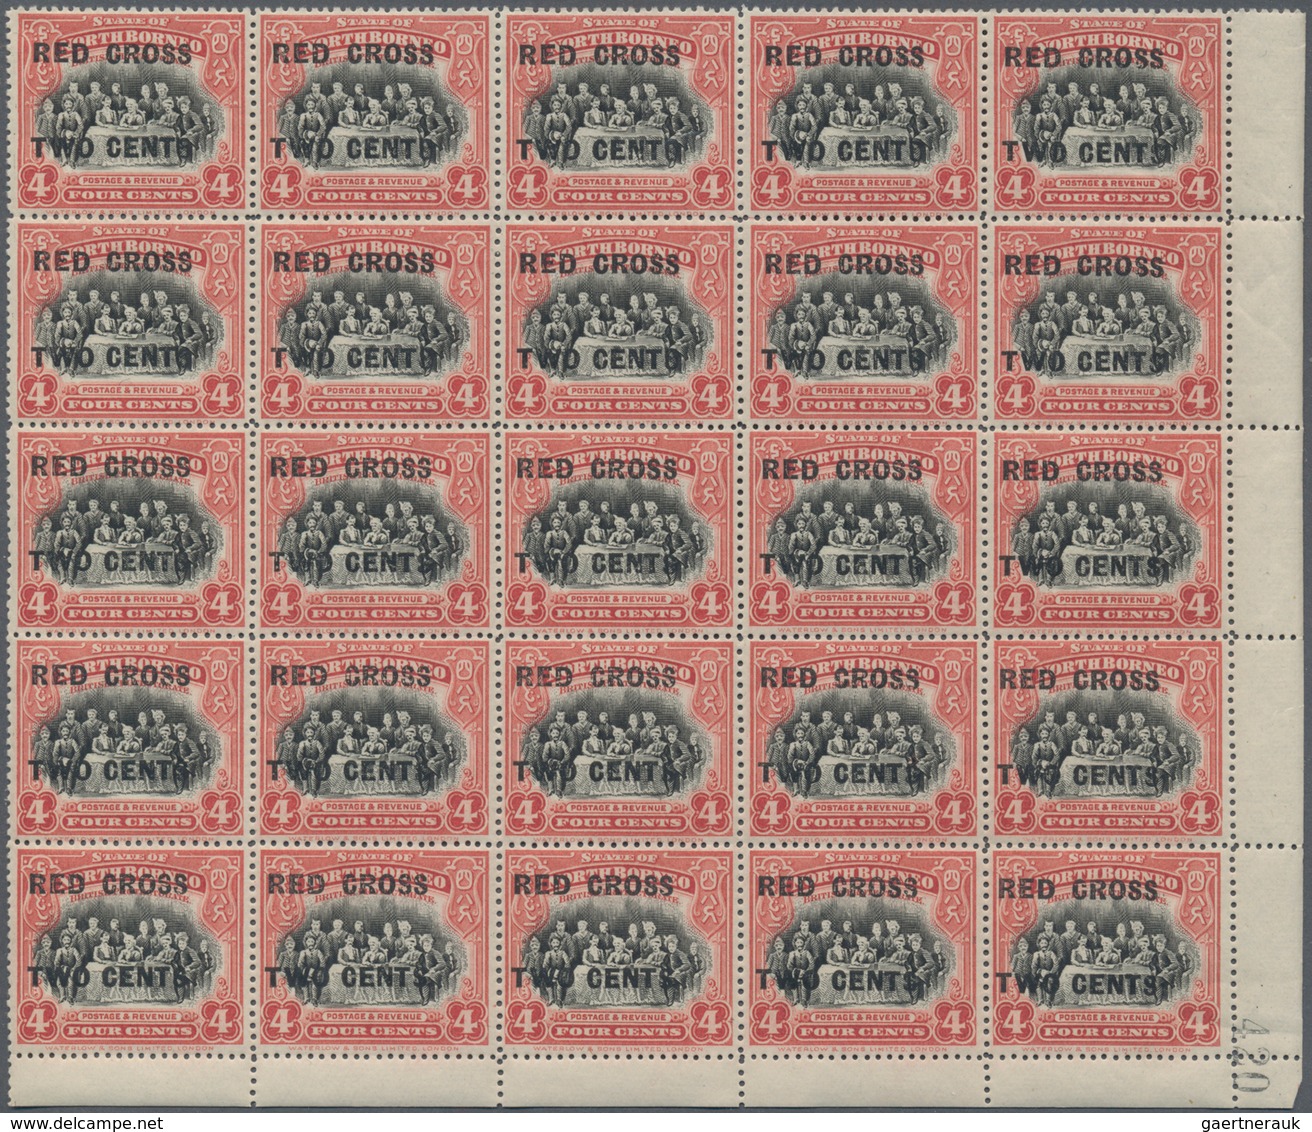 Nordborneo: 1918, Red Cross overprints 1c., 2c., 3c., 4c., 5c., 6c., 8c., seven values in blocks of